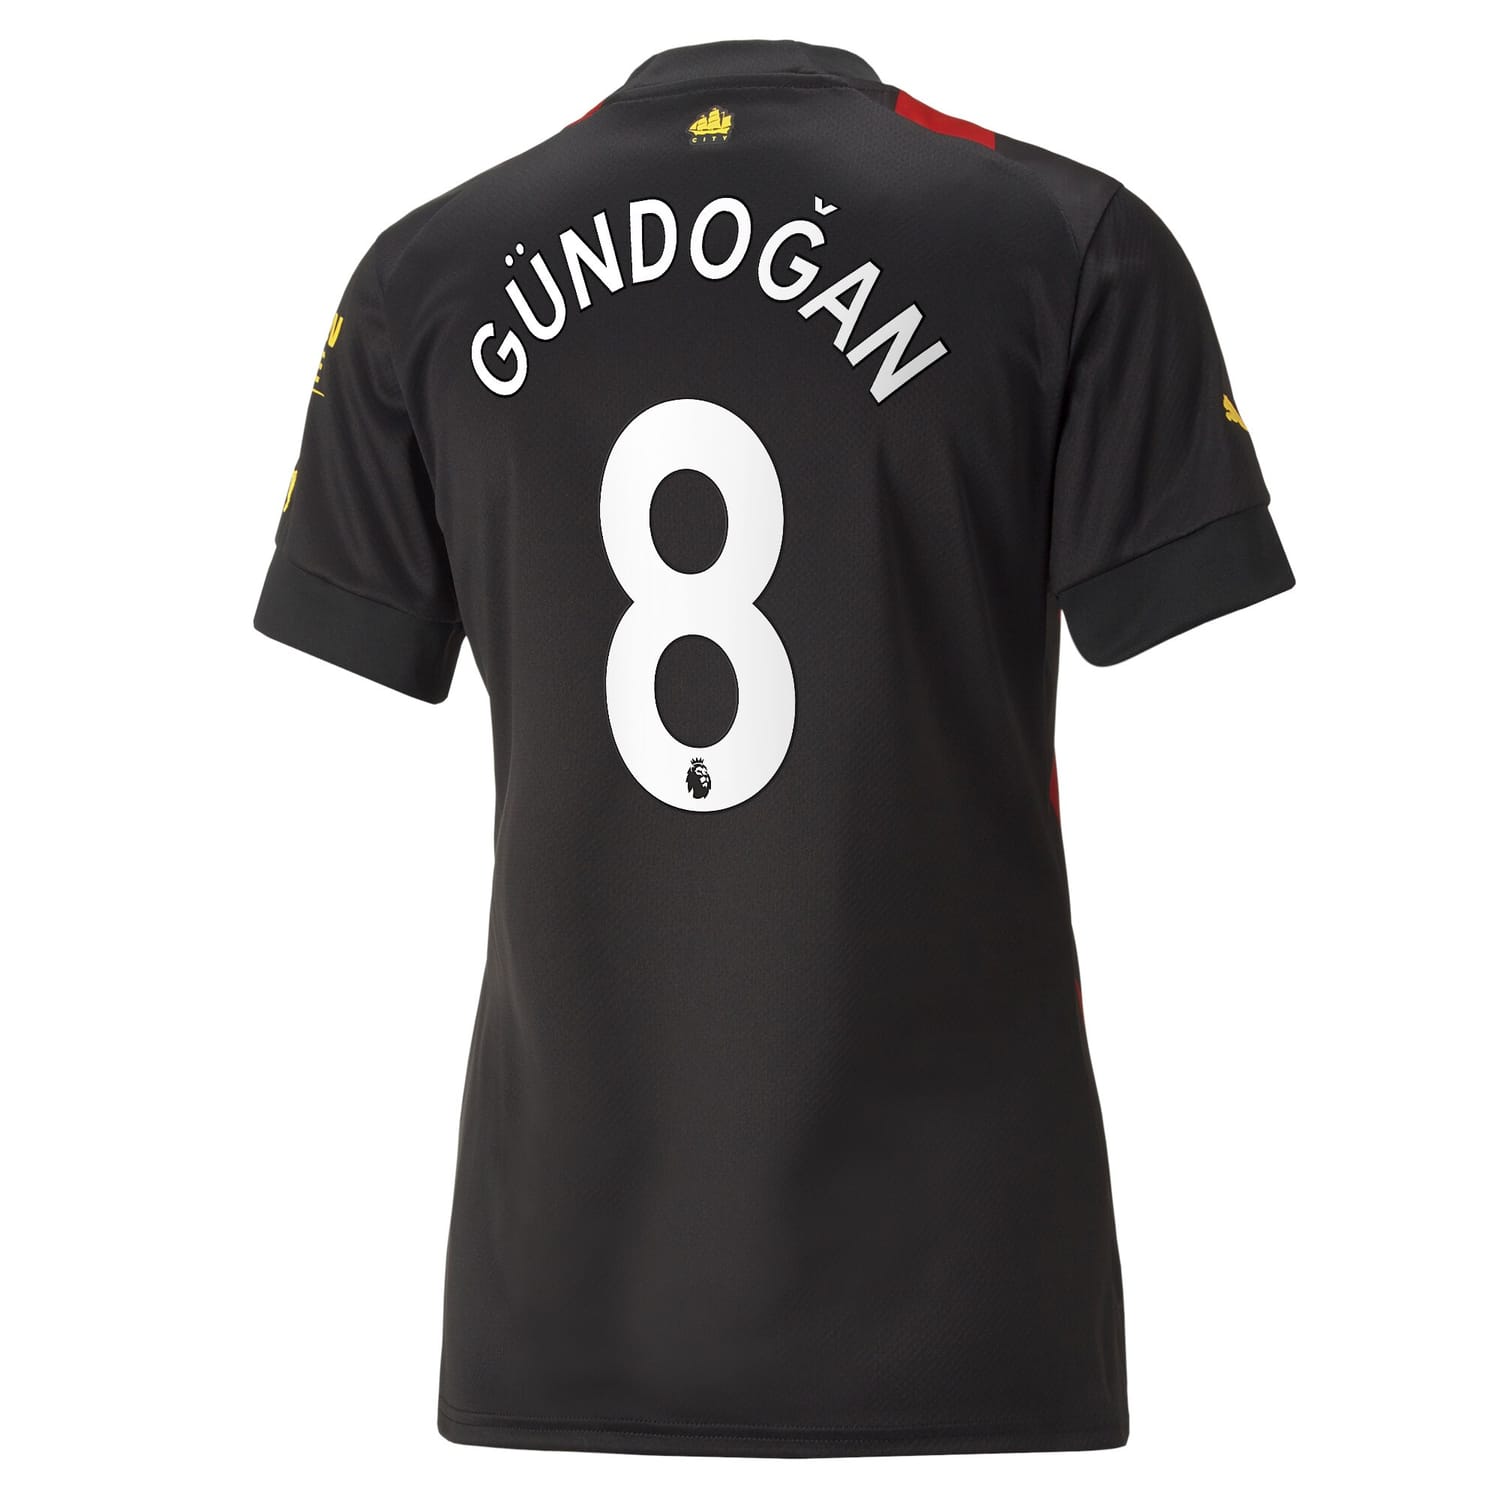 Premier League Manchester City Away Jersey Shirt 2022-23 player Ilkay Gündogan 8 printing for Women